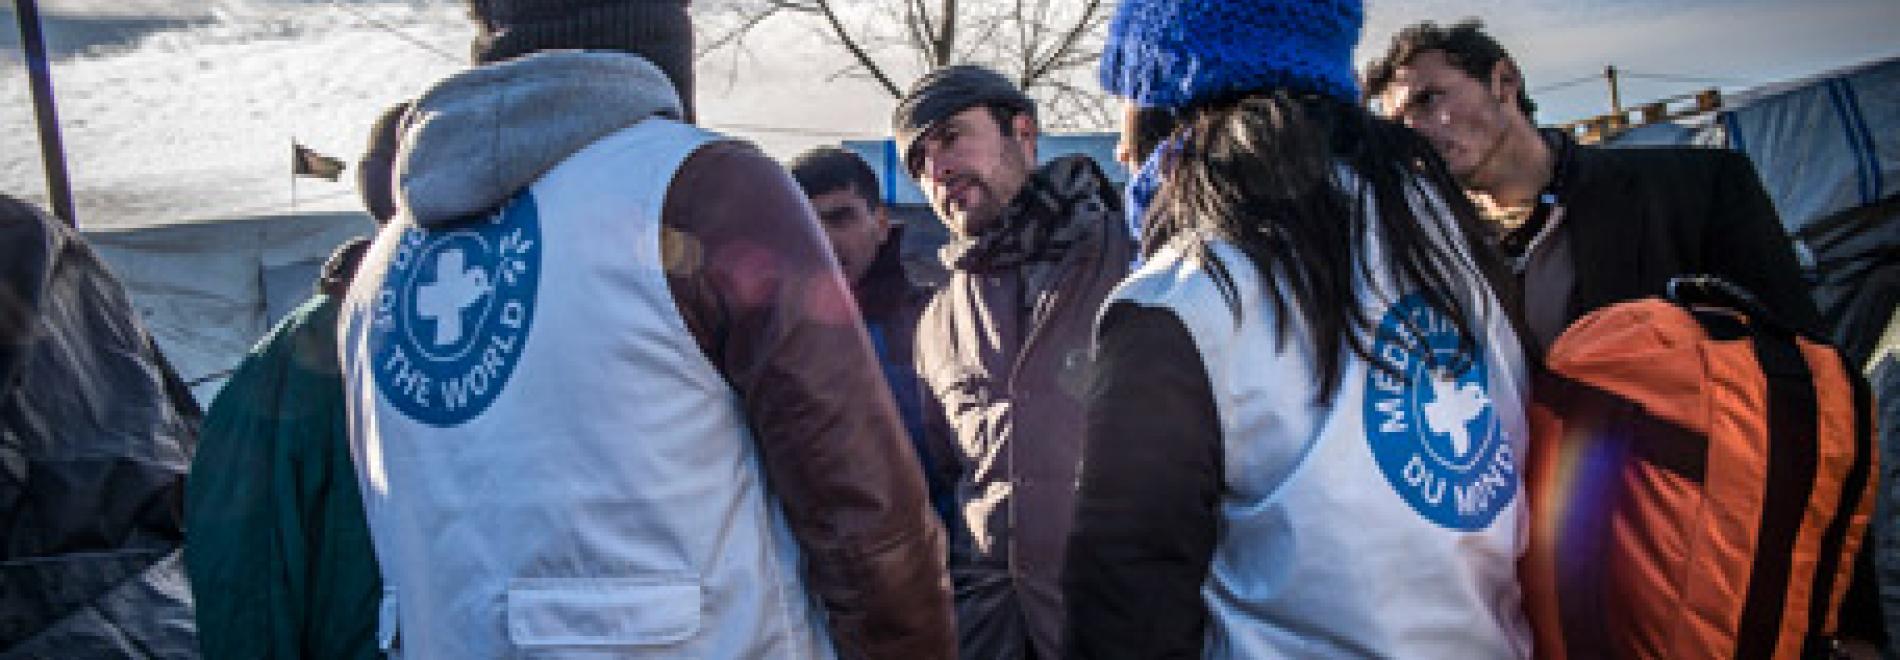 Volunteers meet migrants in Calais ©Olivier Papegnies